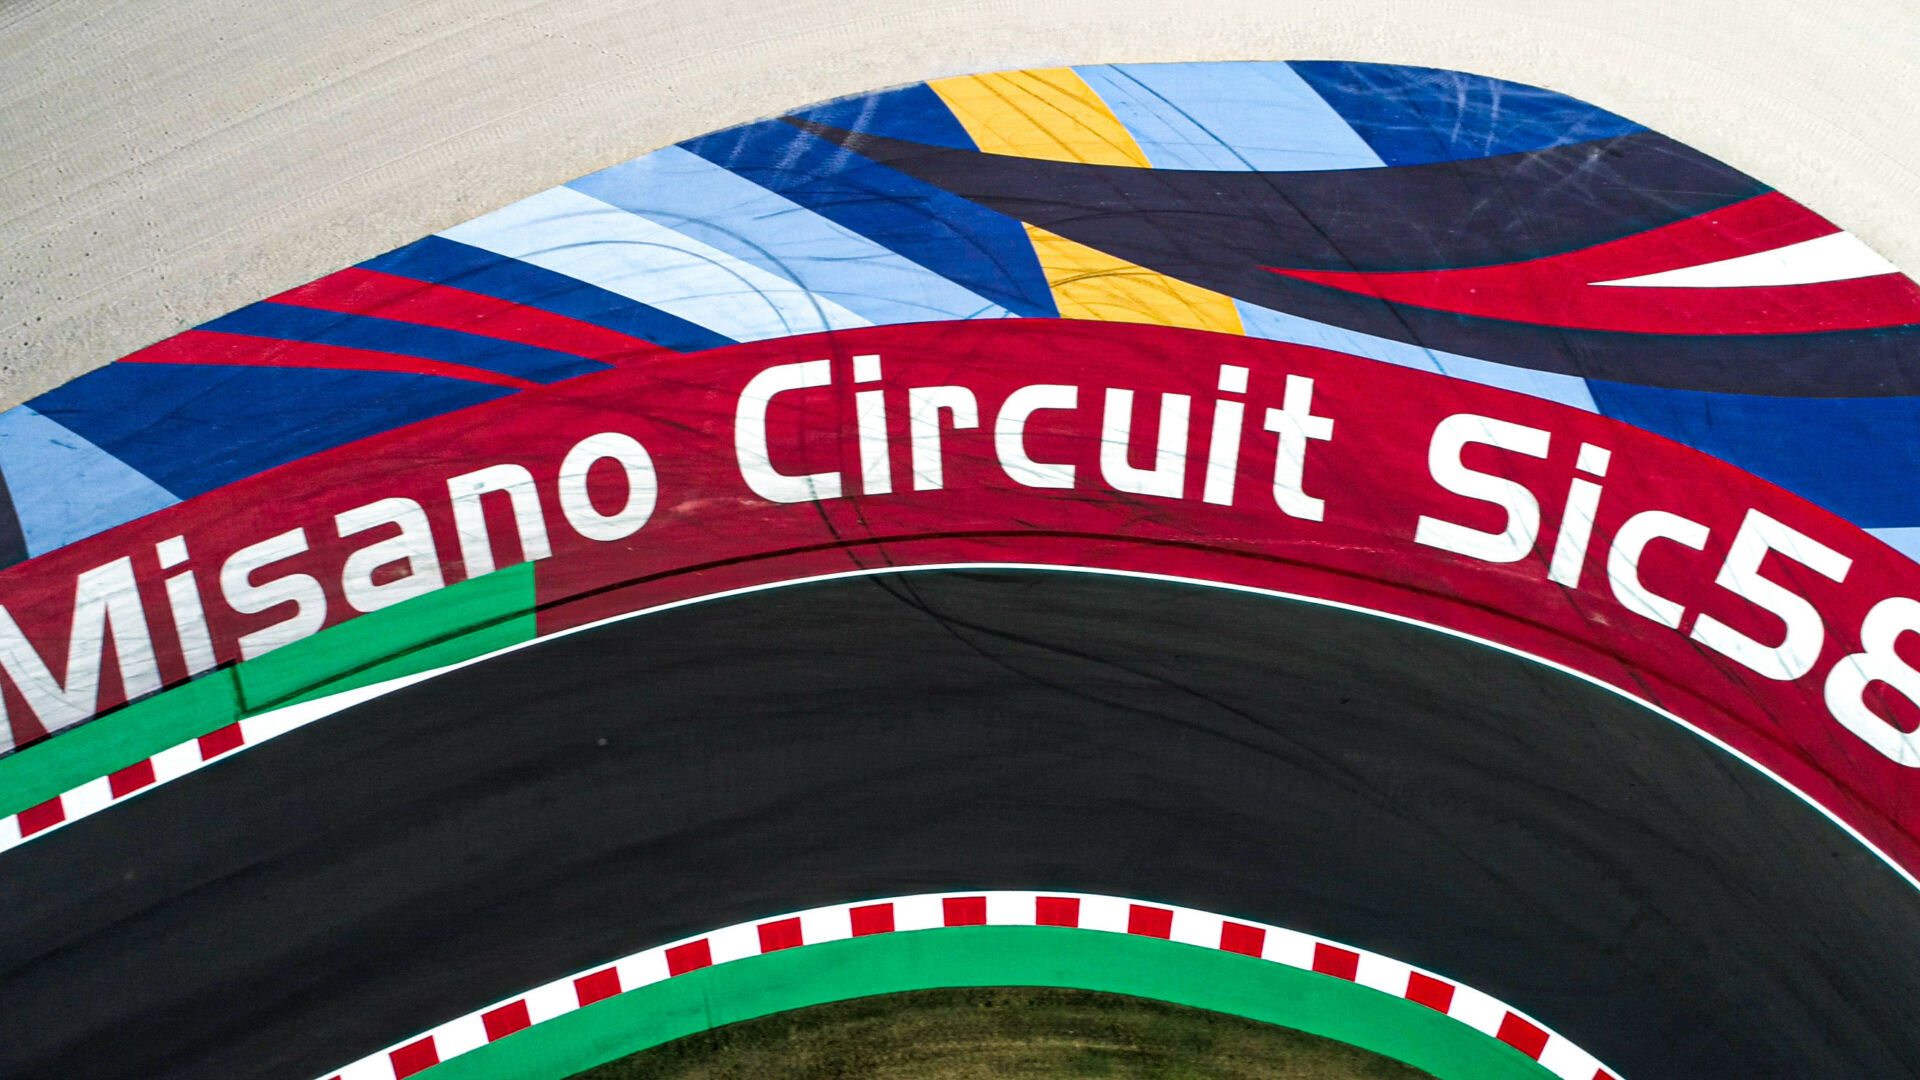 The FIM Superbike World Championship is racing at Misano World Circuit - Marco Simoncelli June 2-4. Photo courtesy Dorna.